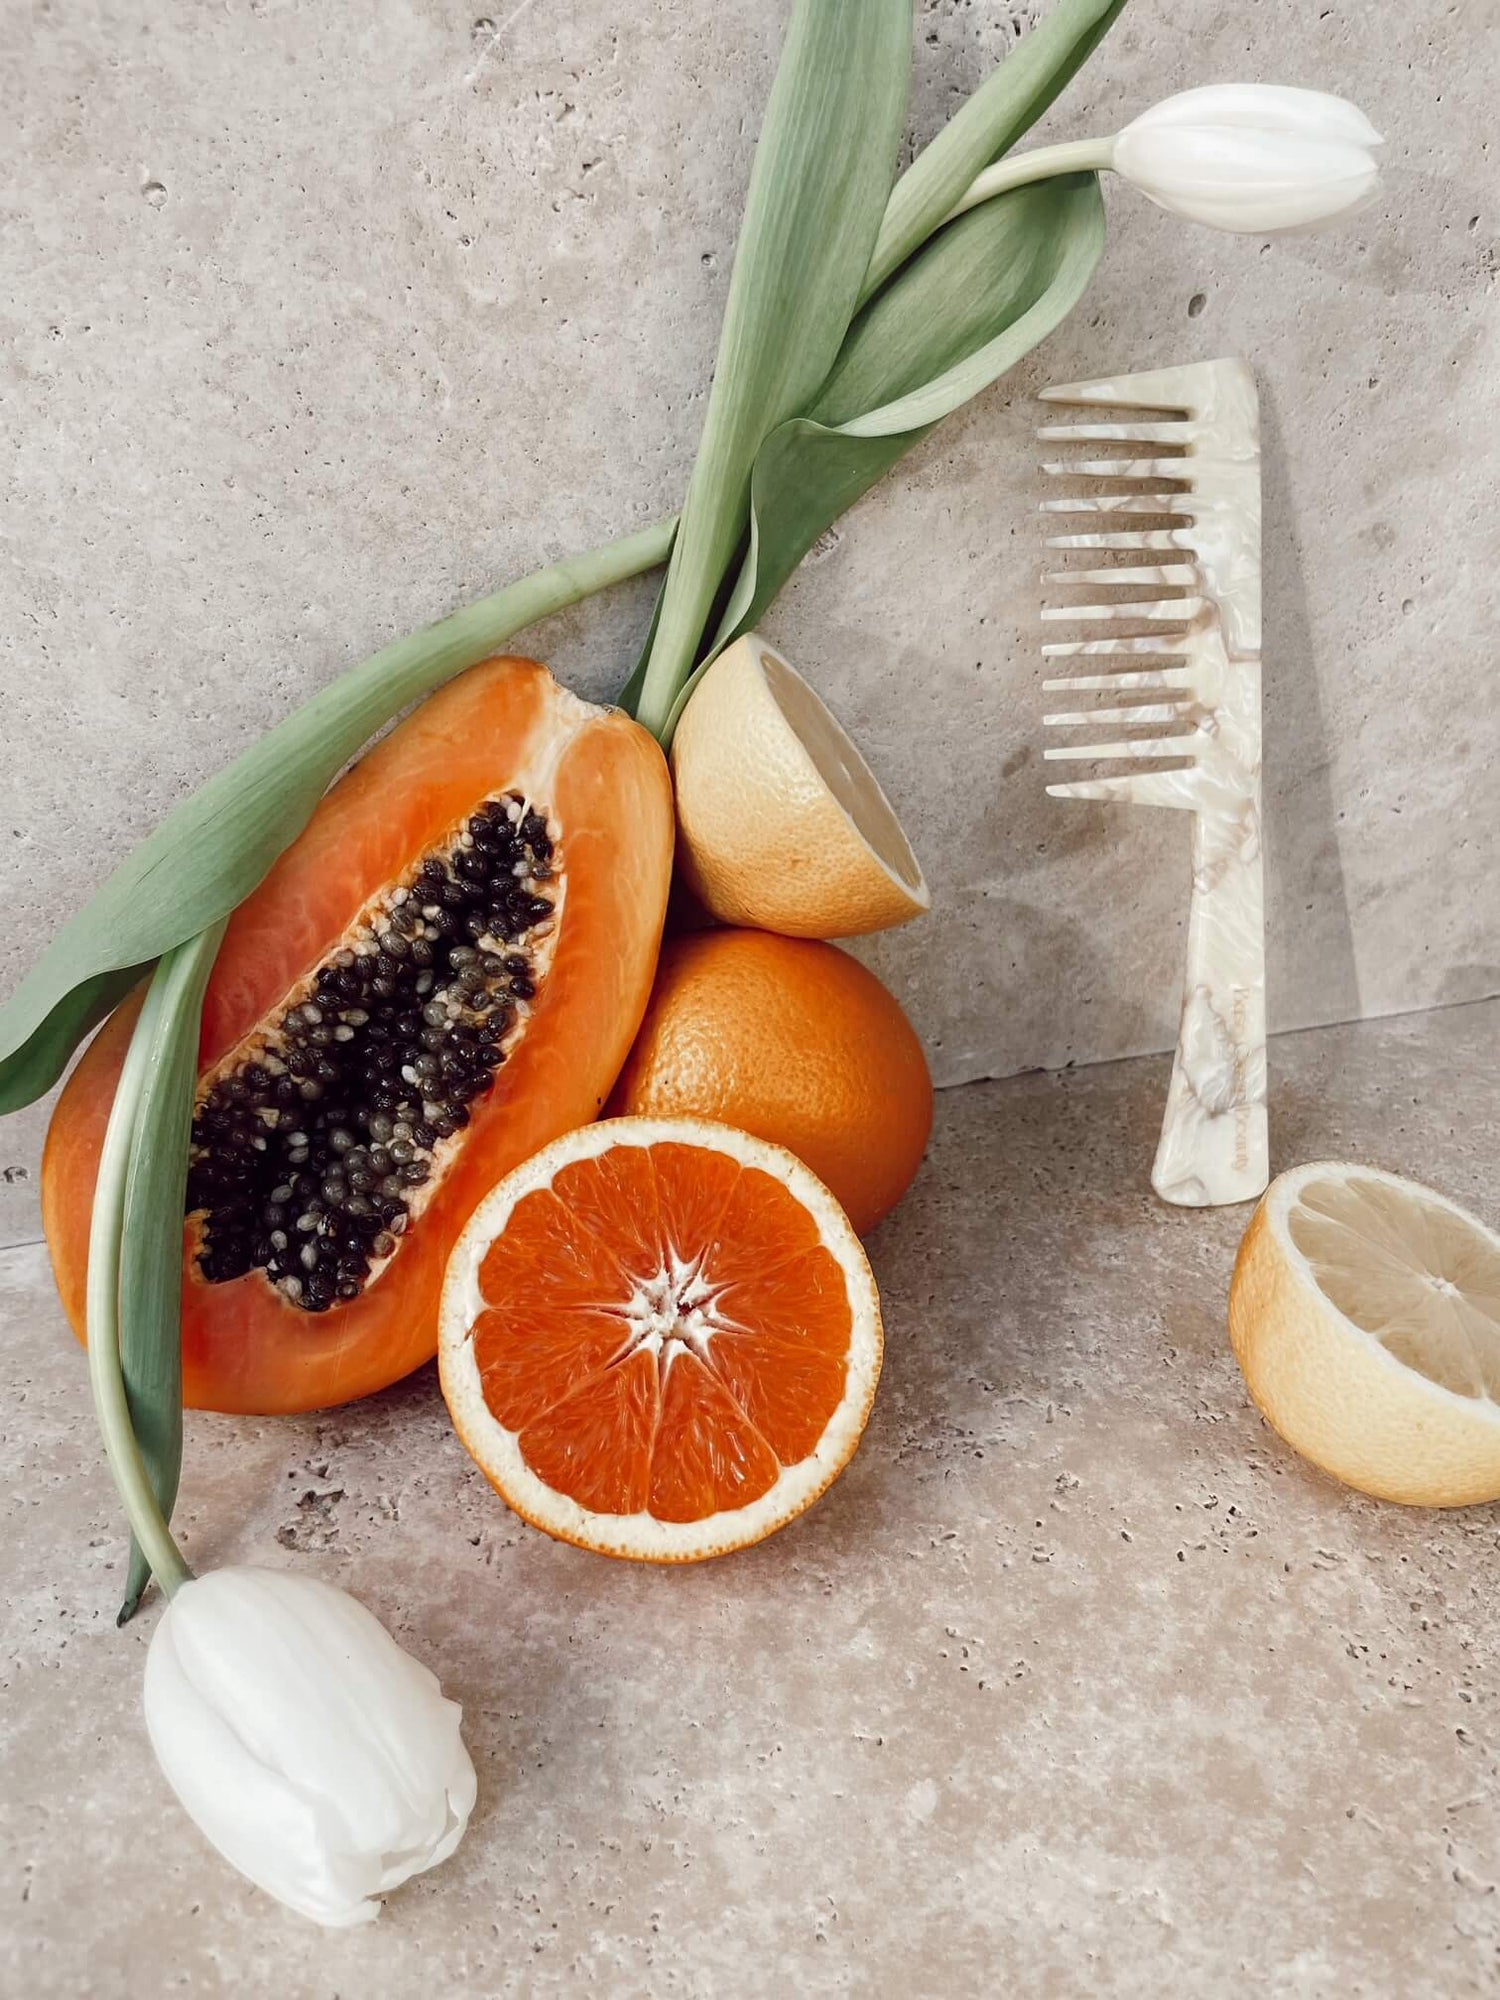 Base Camp Beauty buttermilk comb leaning on a stone bathromm benchtop amongst papaya, oranges, lemons and white tulips.